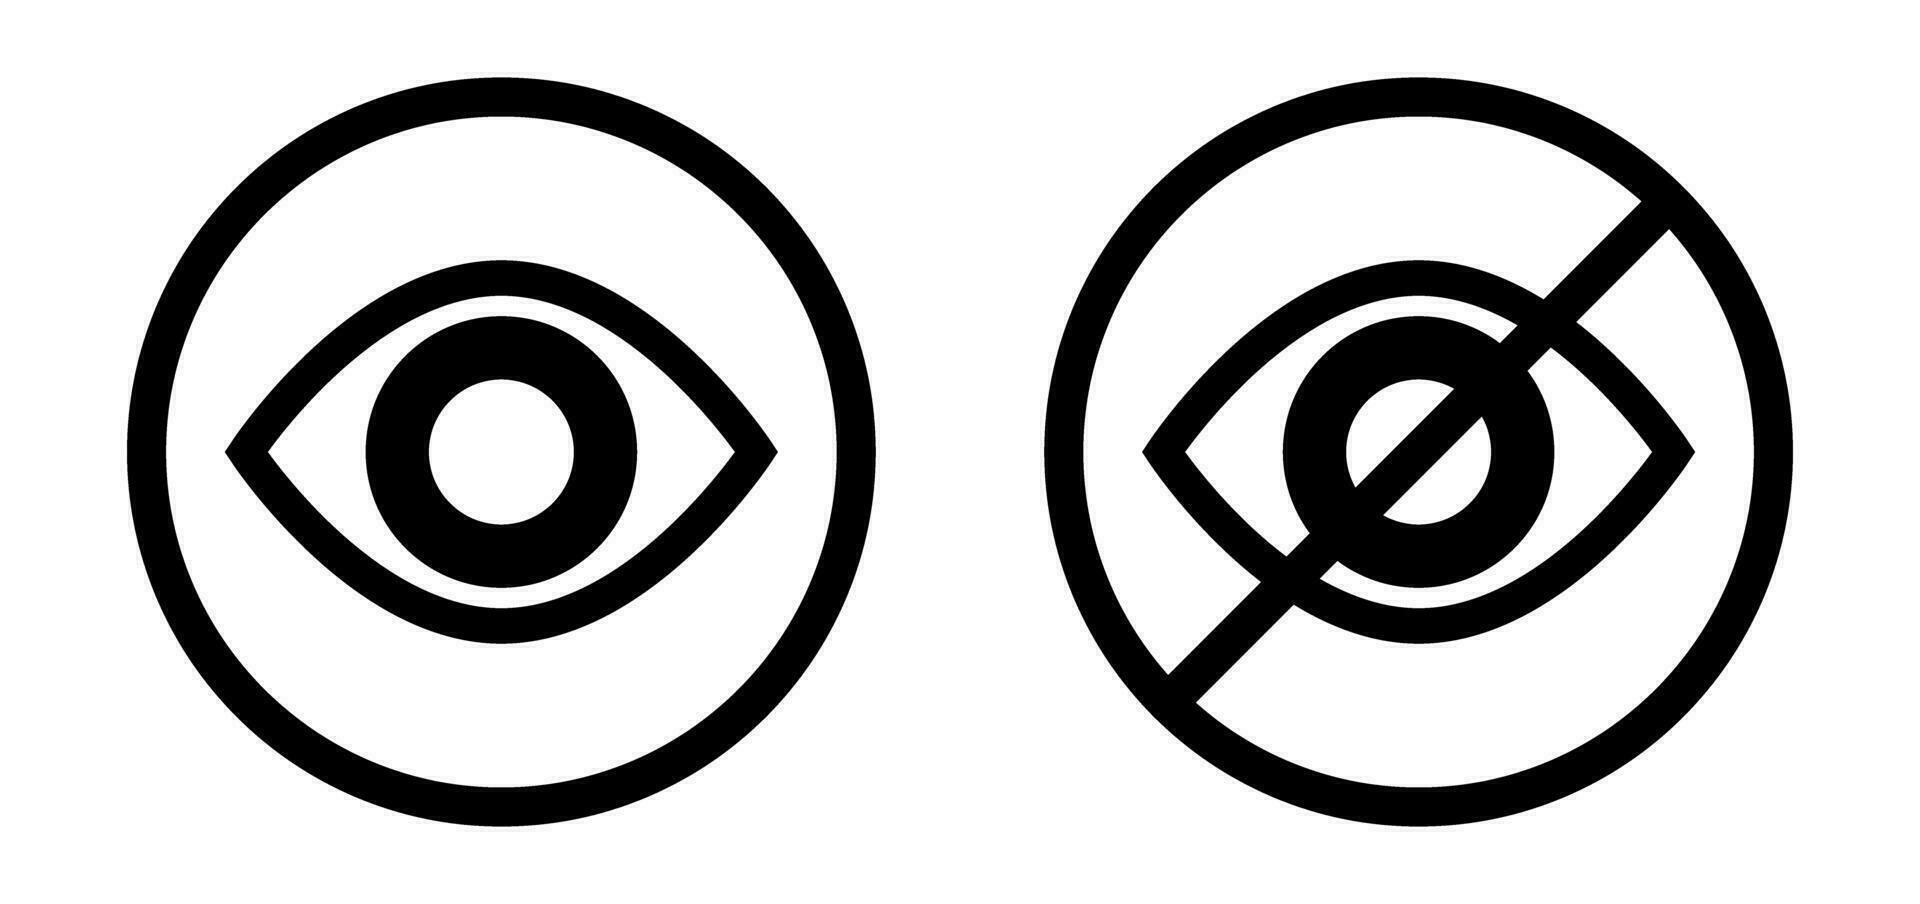 Eye and blocked eye icon set. Vector. vector